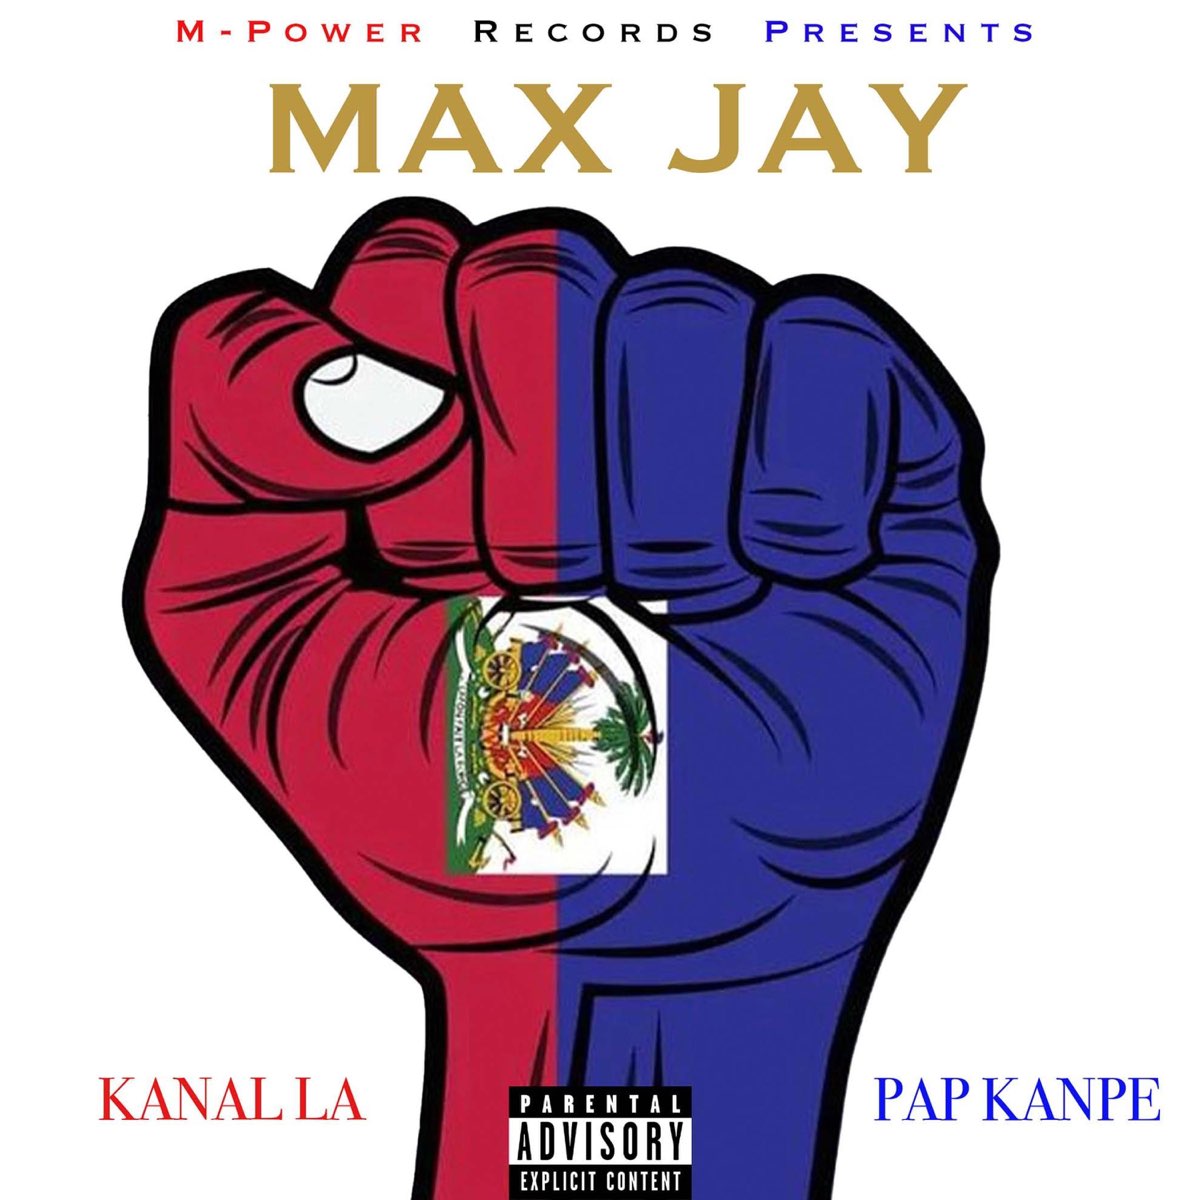 Listen to Gamax - Mal Pou Wont Yo [Kanaval 2021] by plezikanaval in Kanaval  2021 playlist online for free on SoundCloud